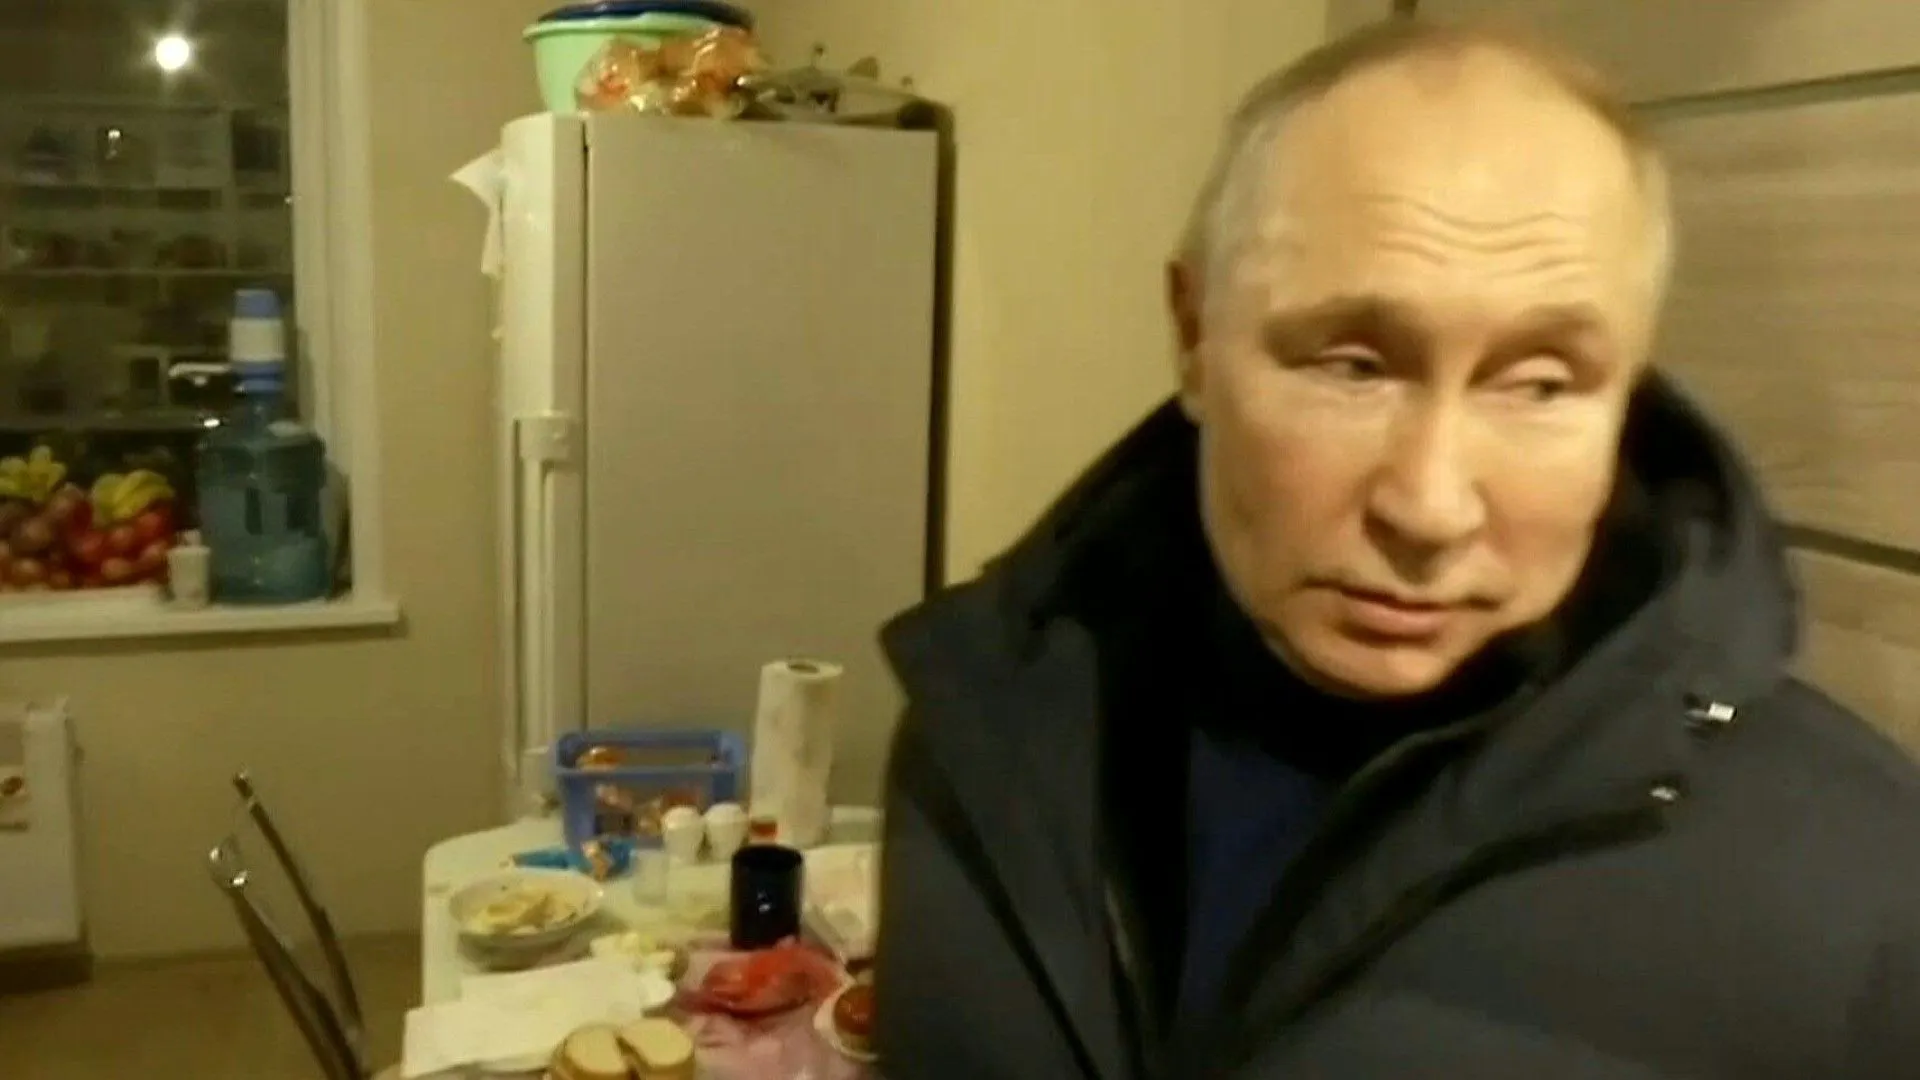 Putin on sightseeing tour in Mariupol